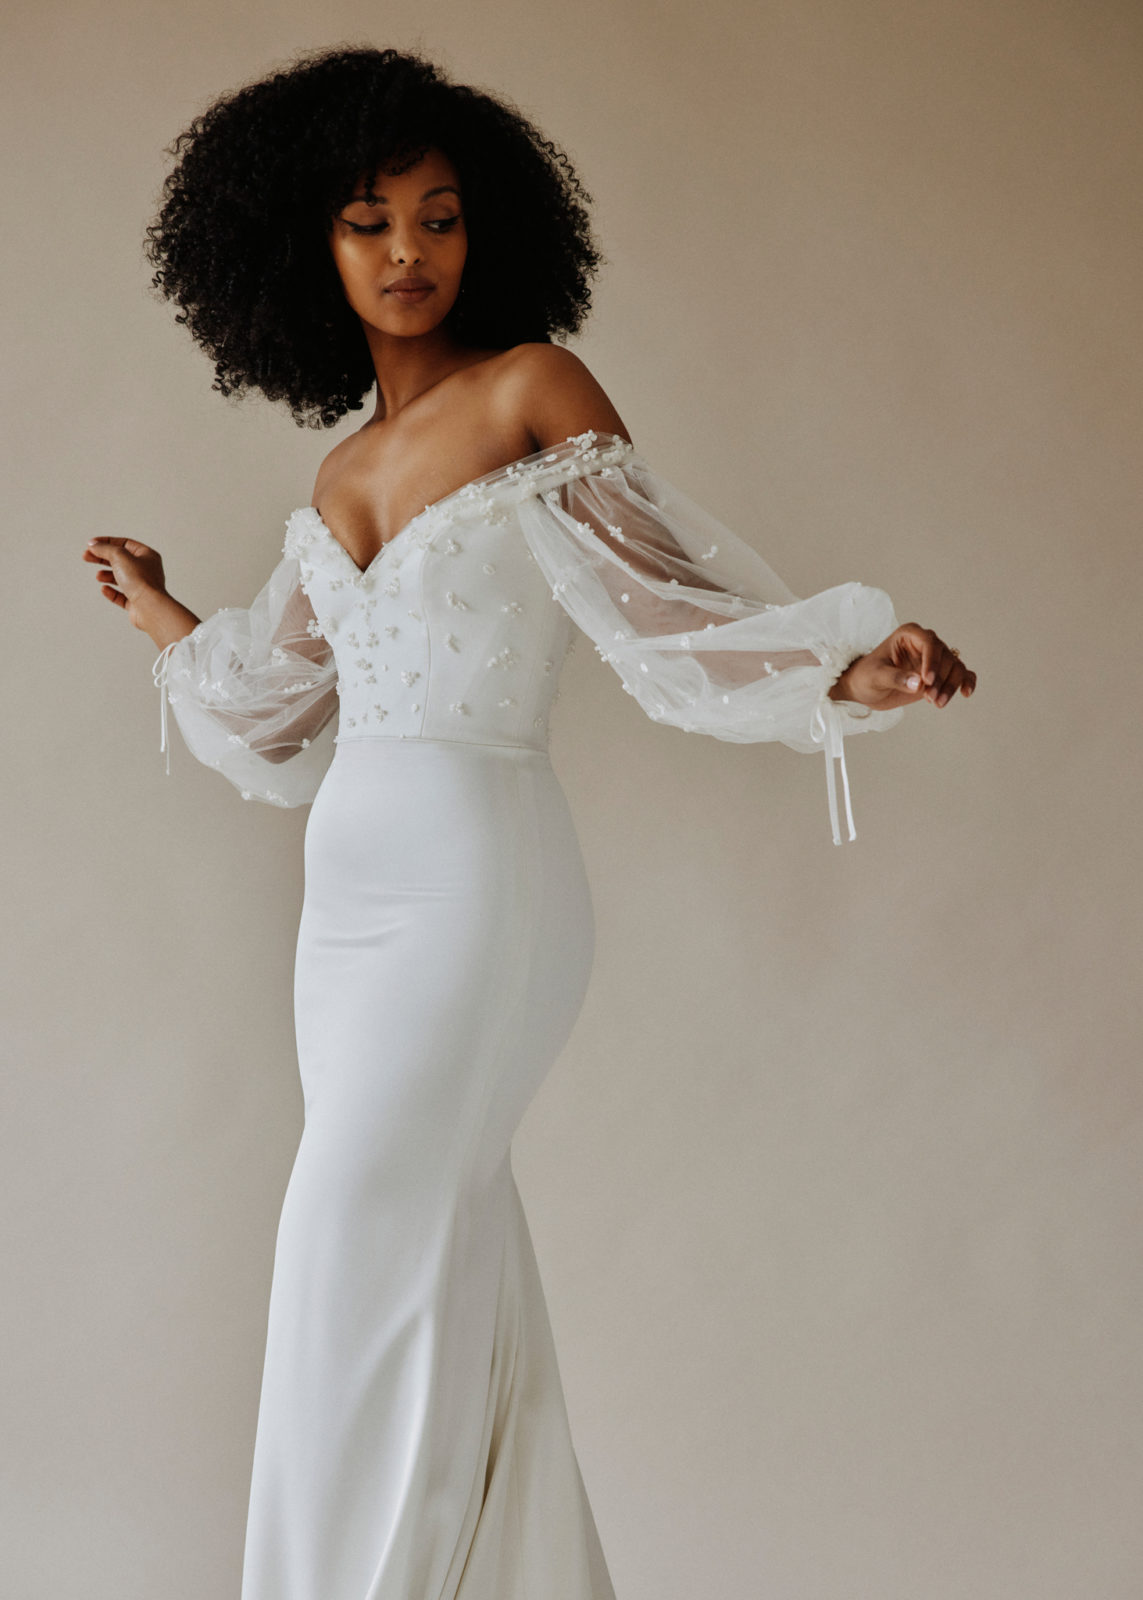 2022 Bridal gowns from Vancouver desginer Laudae, Brontë Bride favourite Canadian bridal designers